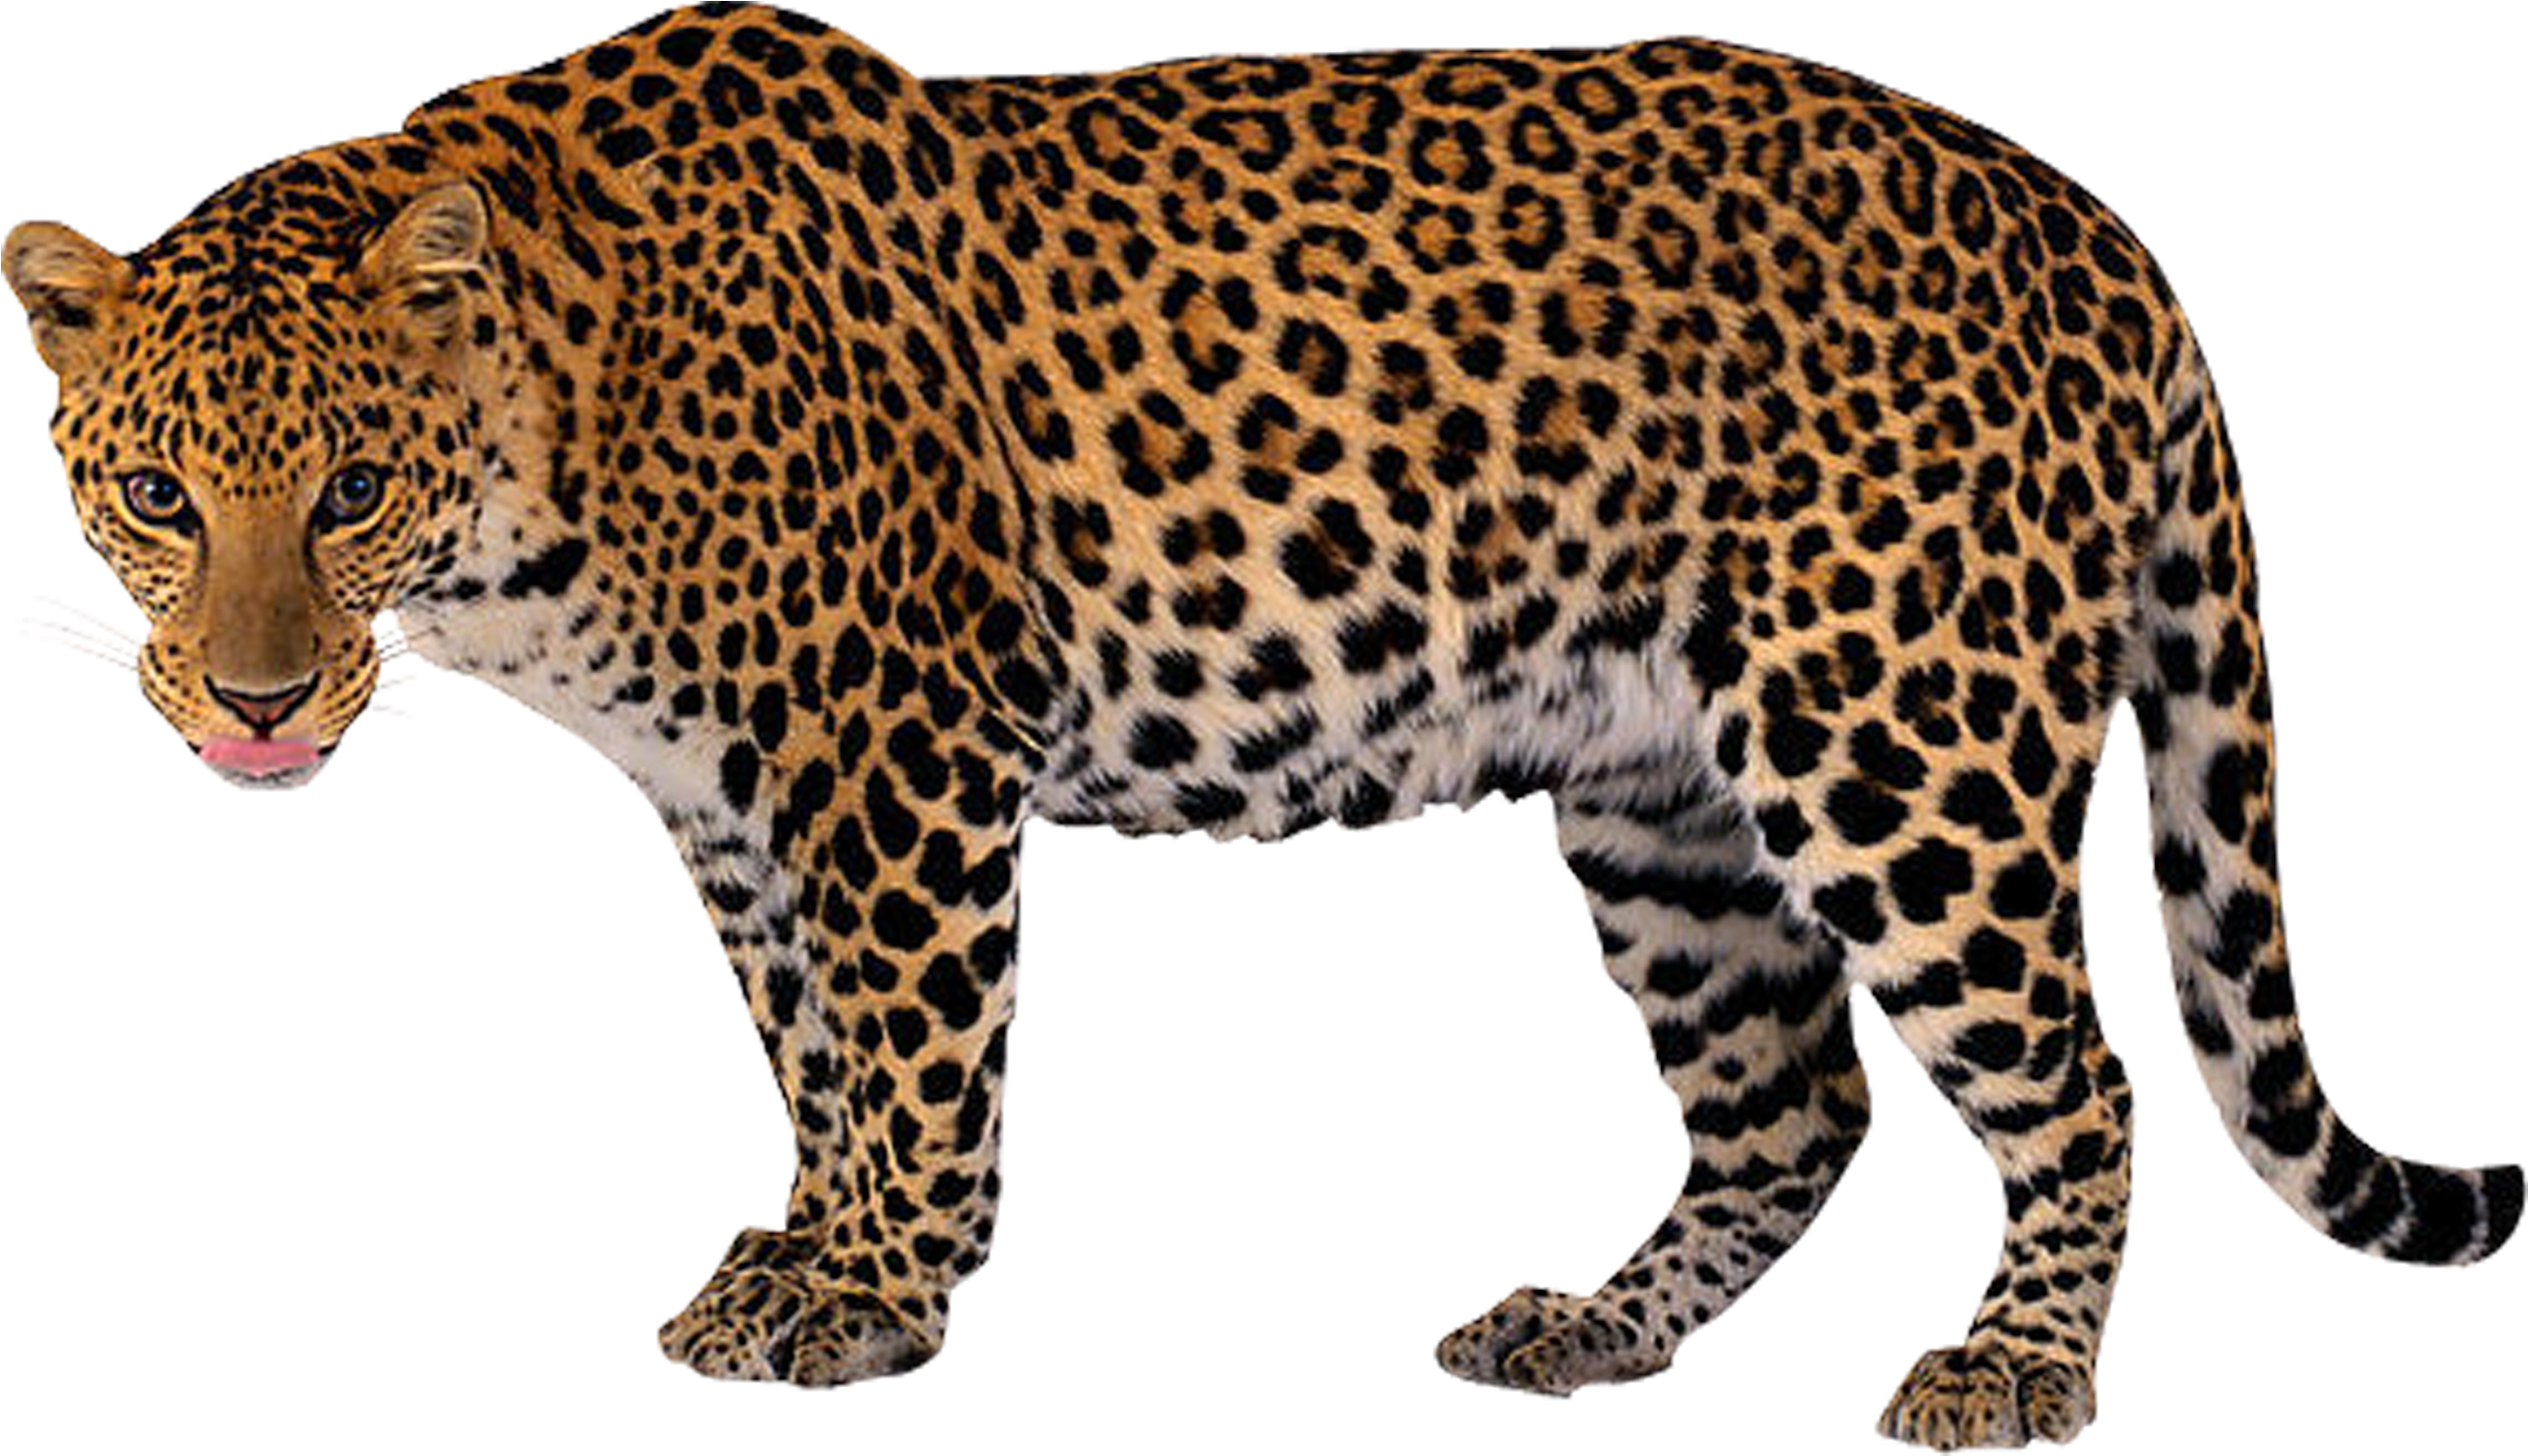 A Large Leopard With Black Spots